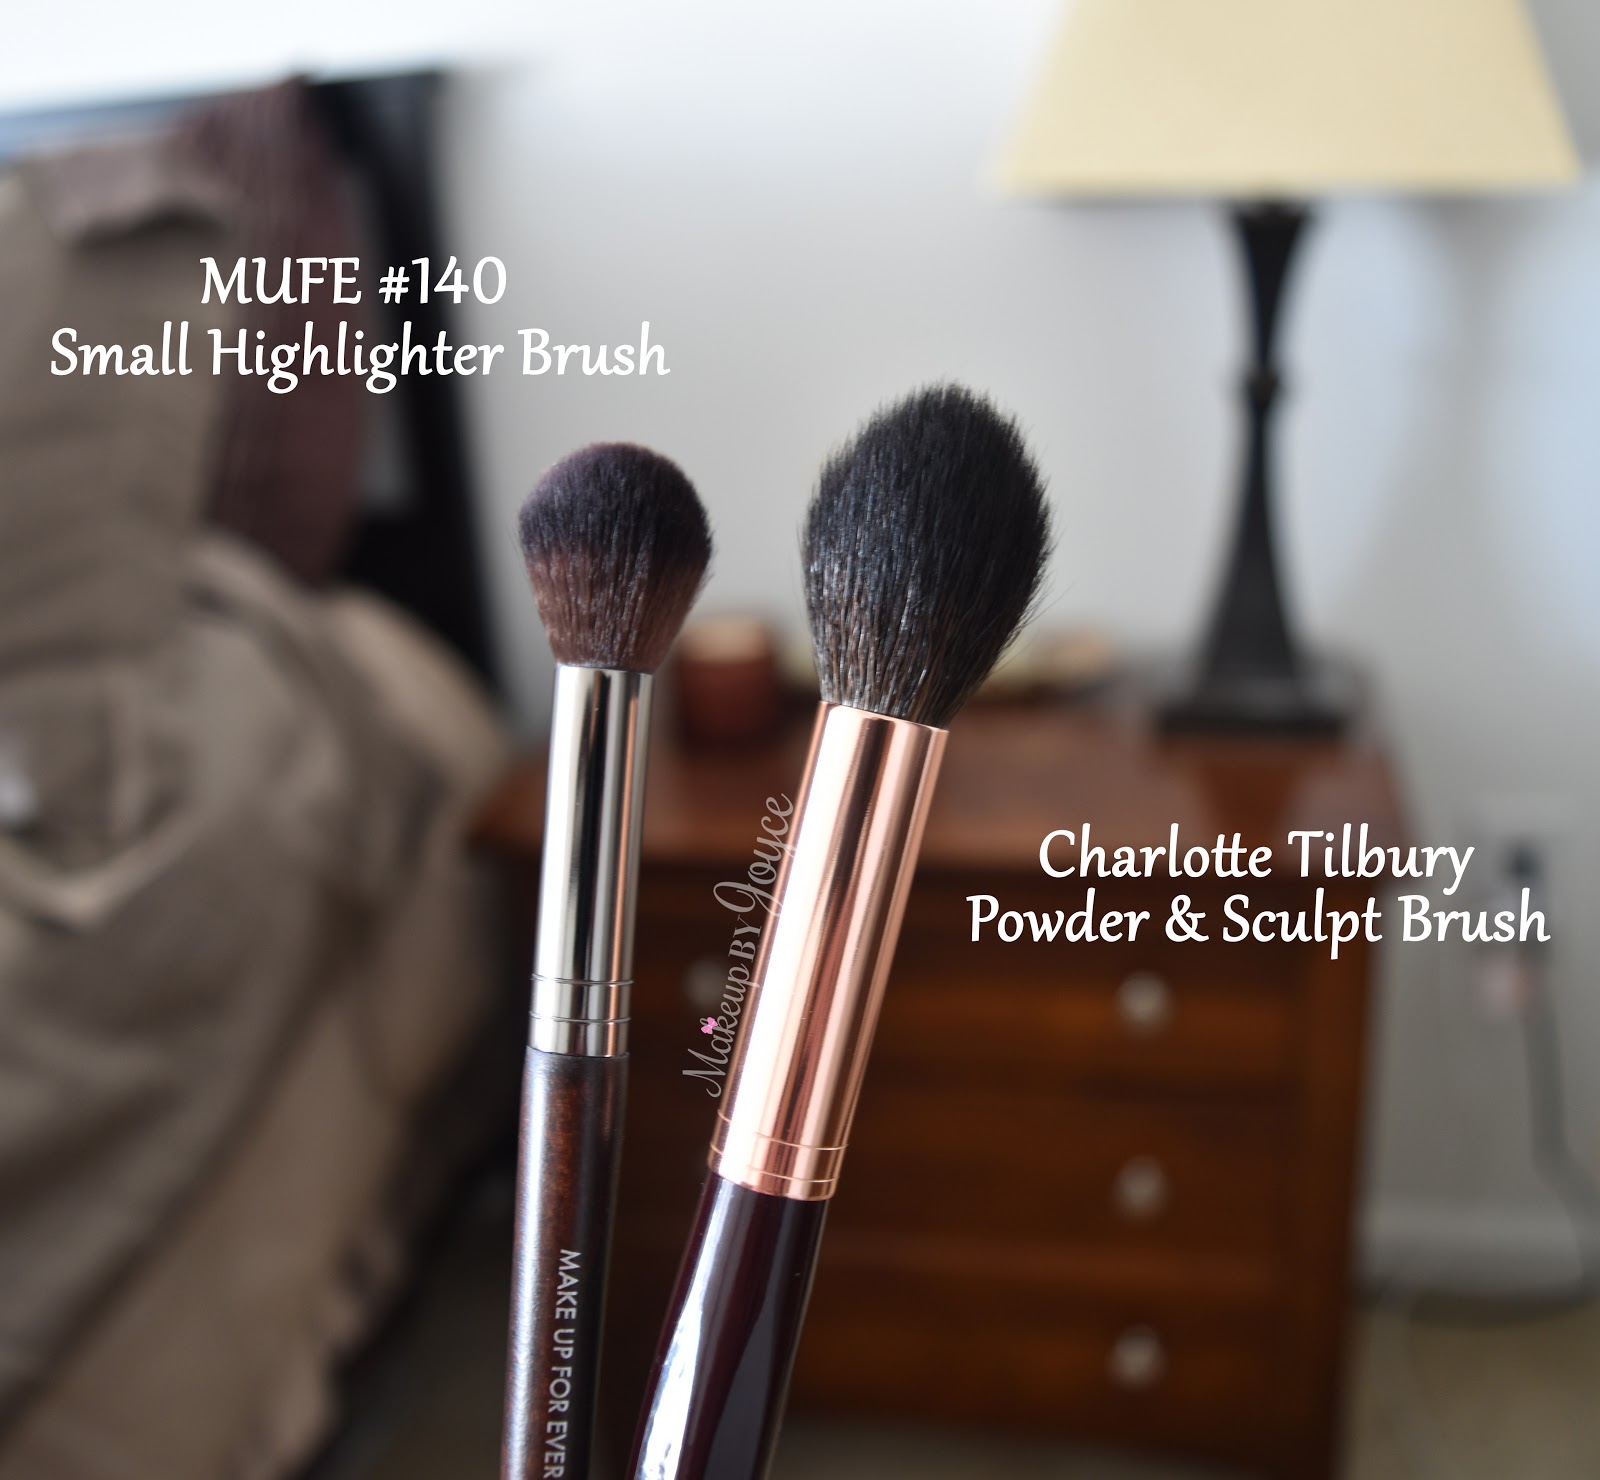 Charlotte Tilbury Powder & Sculpt Brush